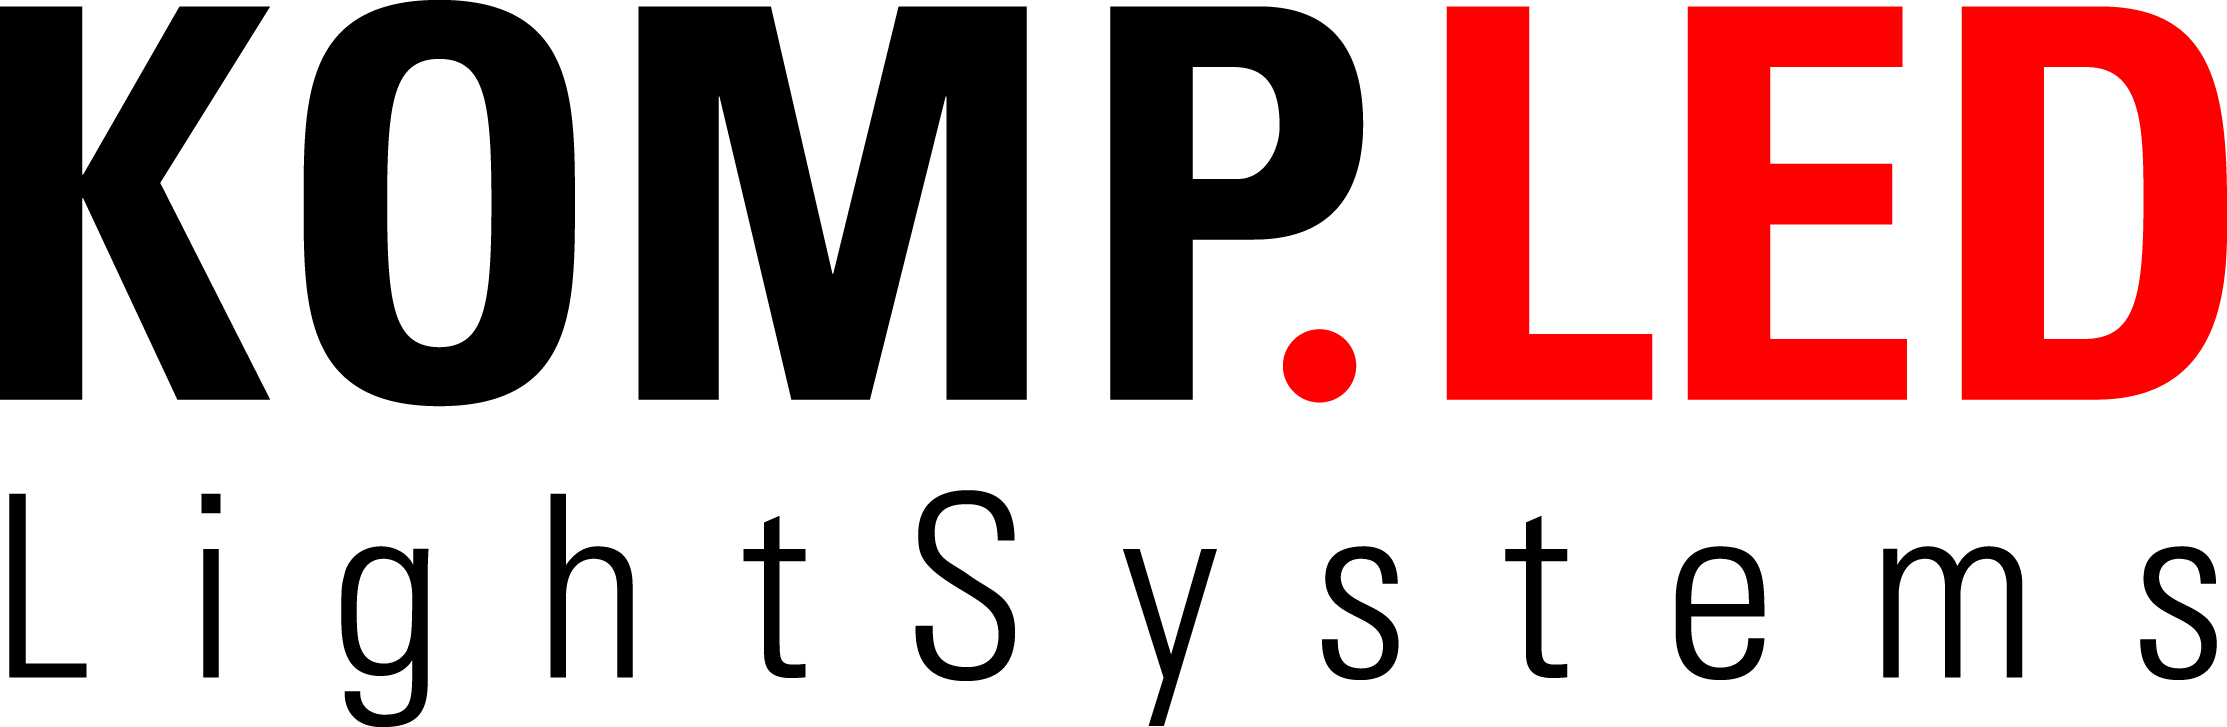 KompLED Lightsystems GmbH & Co. KG